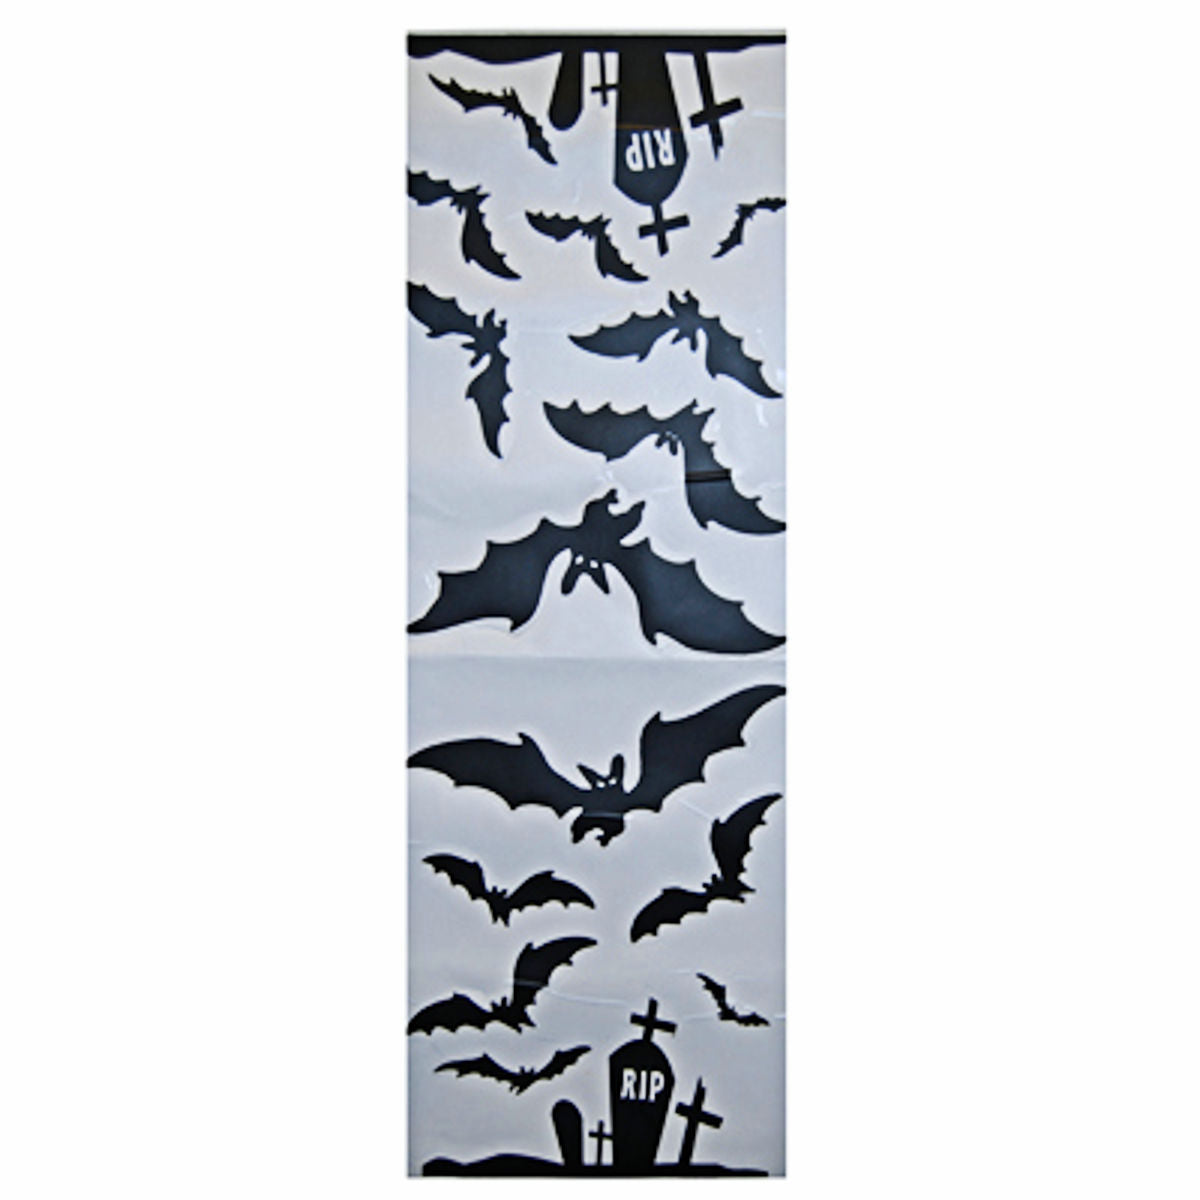 Bats Wall Art Decals Halloween Party Decorations 2 sheets 24.7 x 69.8 cm